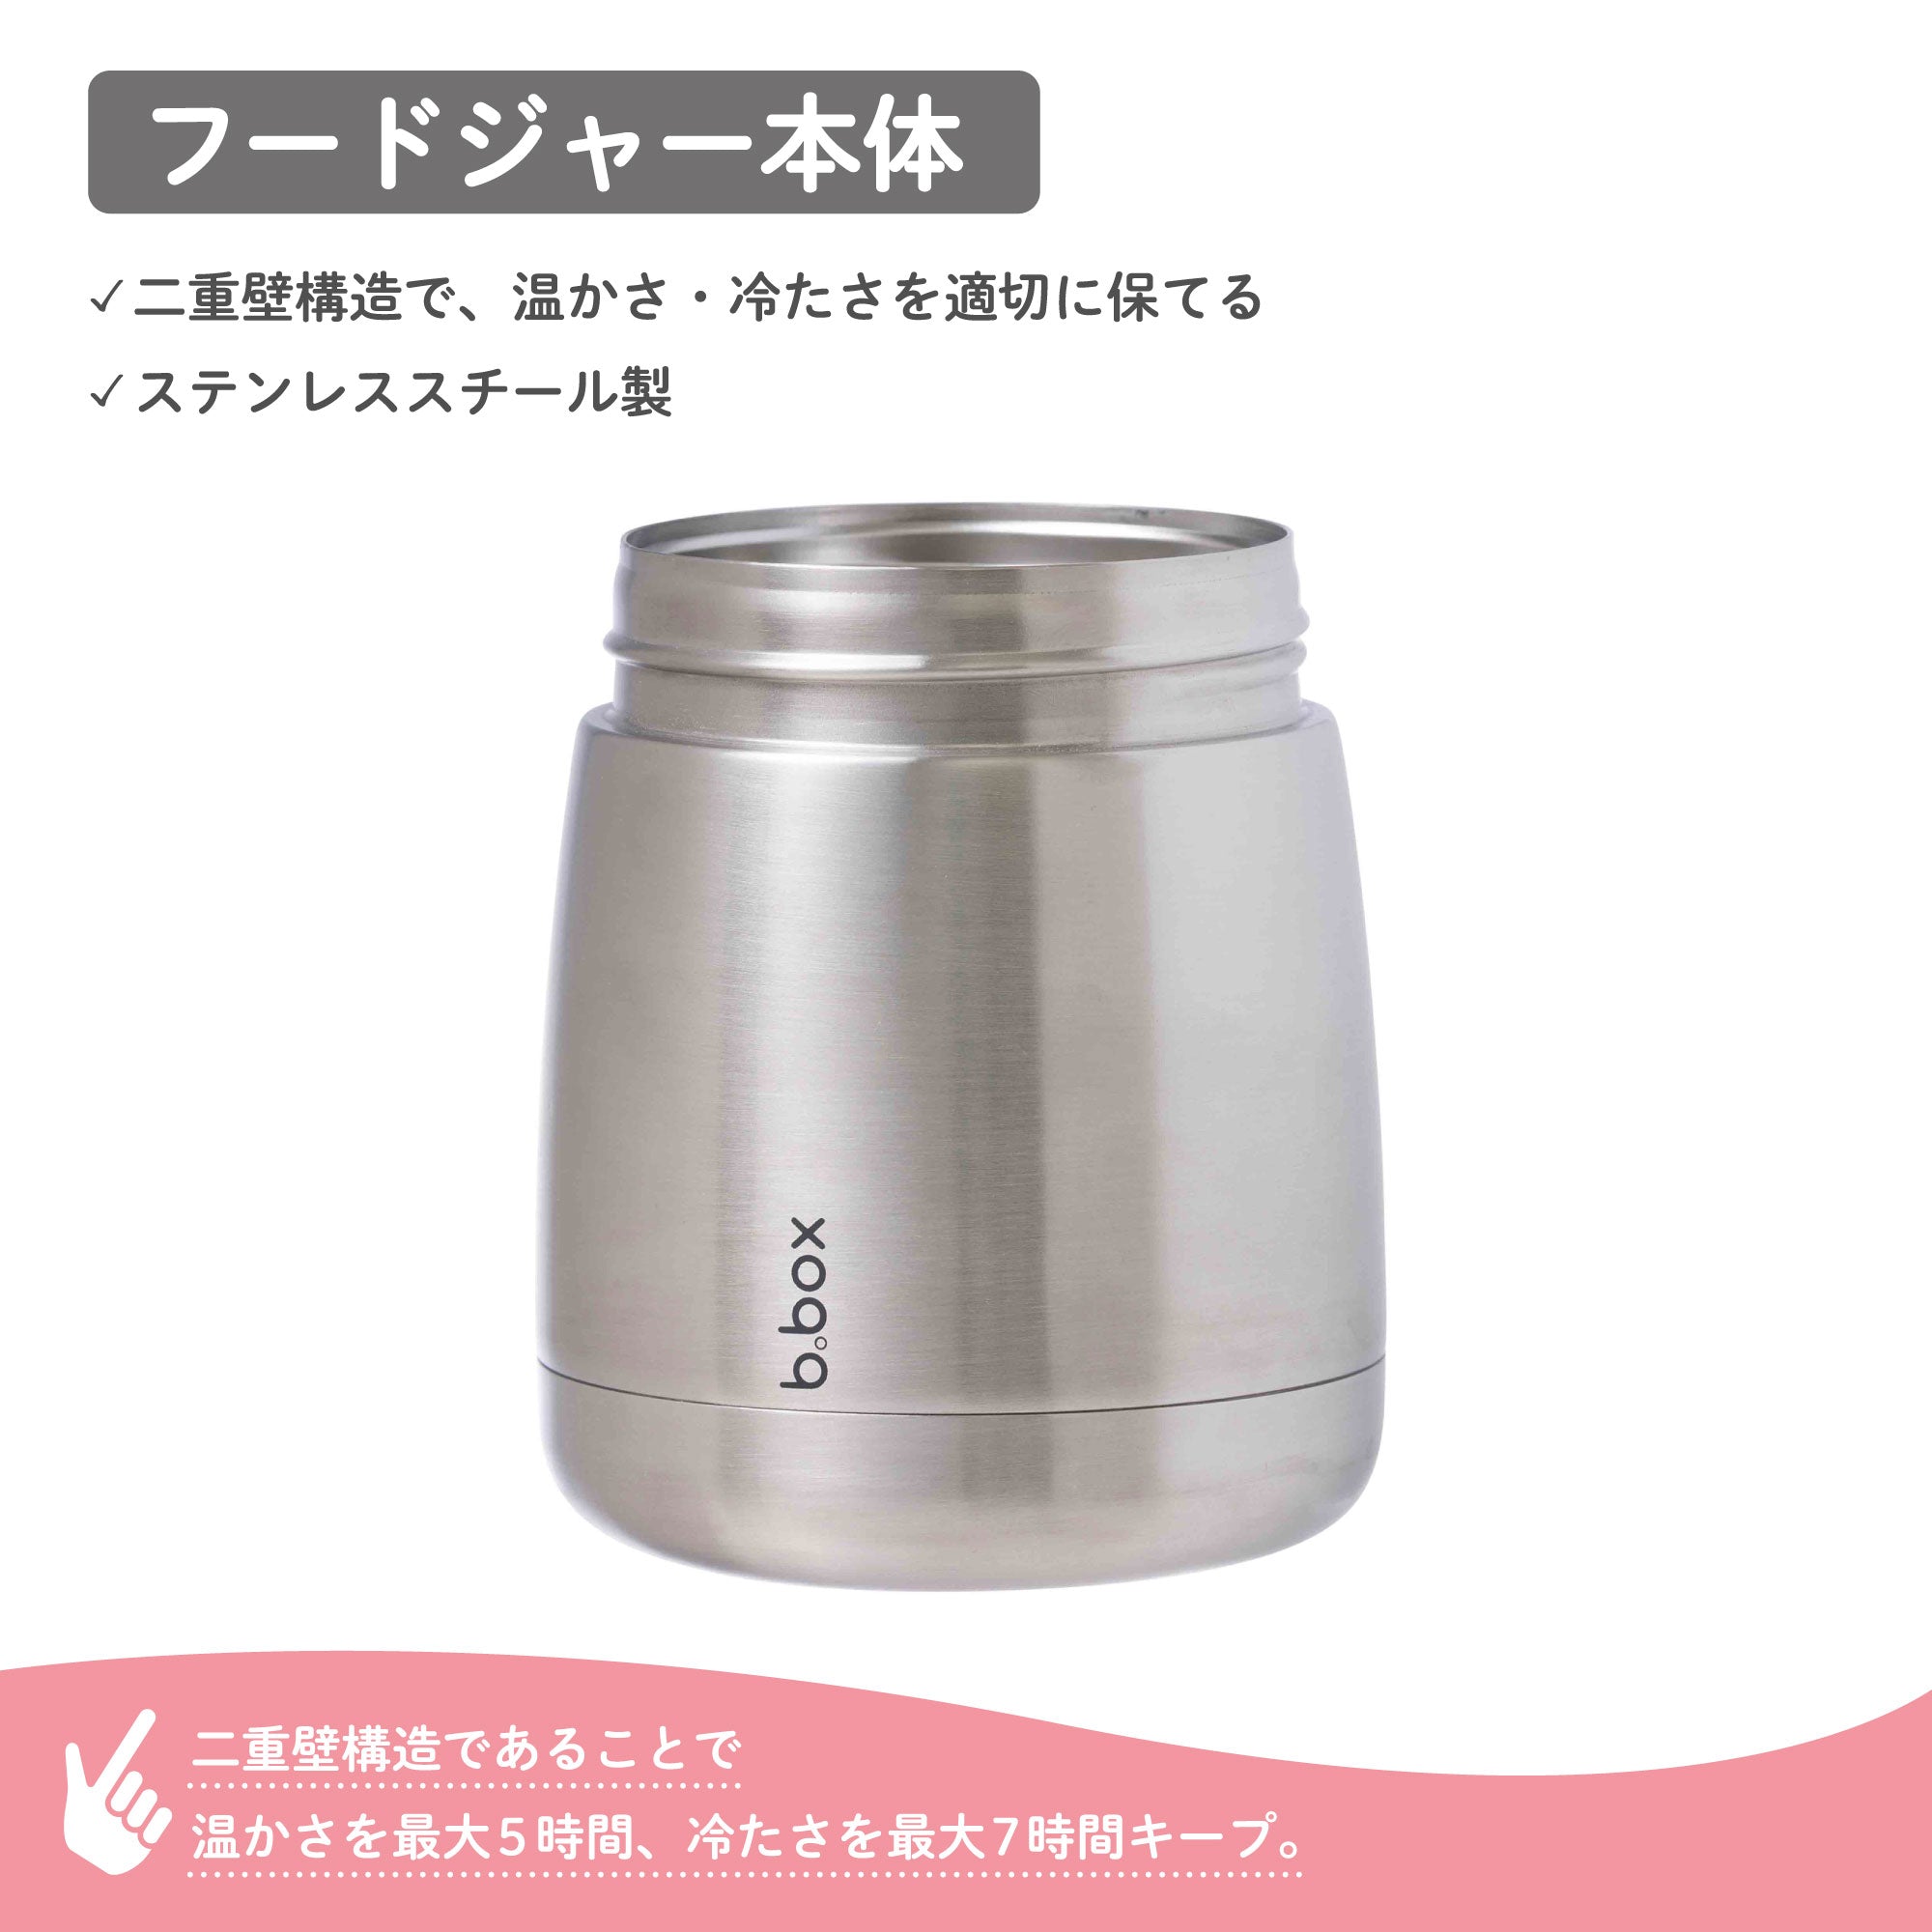 *b.box* Insulated food jar ステンレスフードジャー - indigo rose